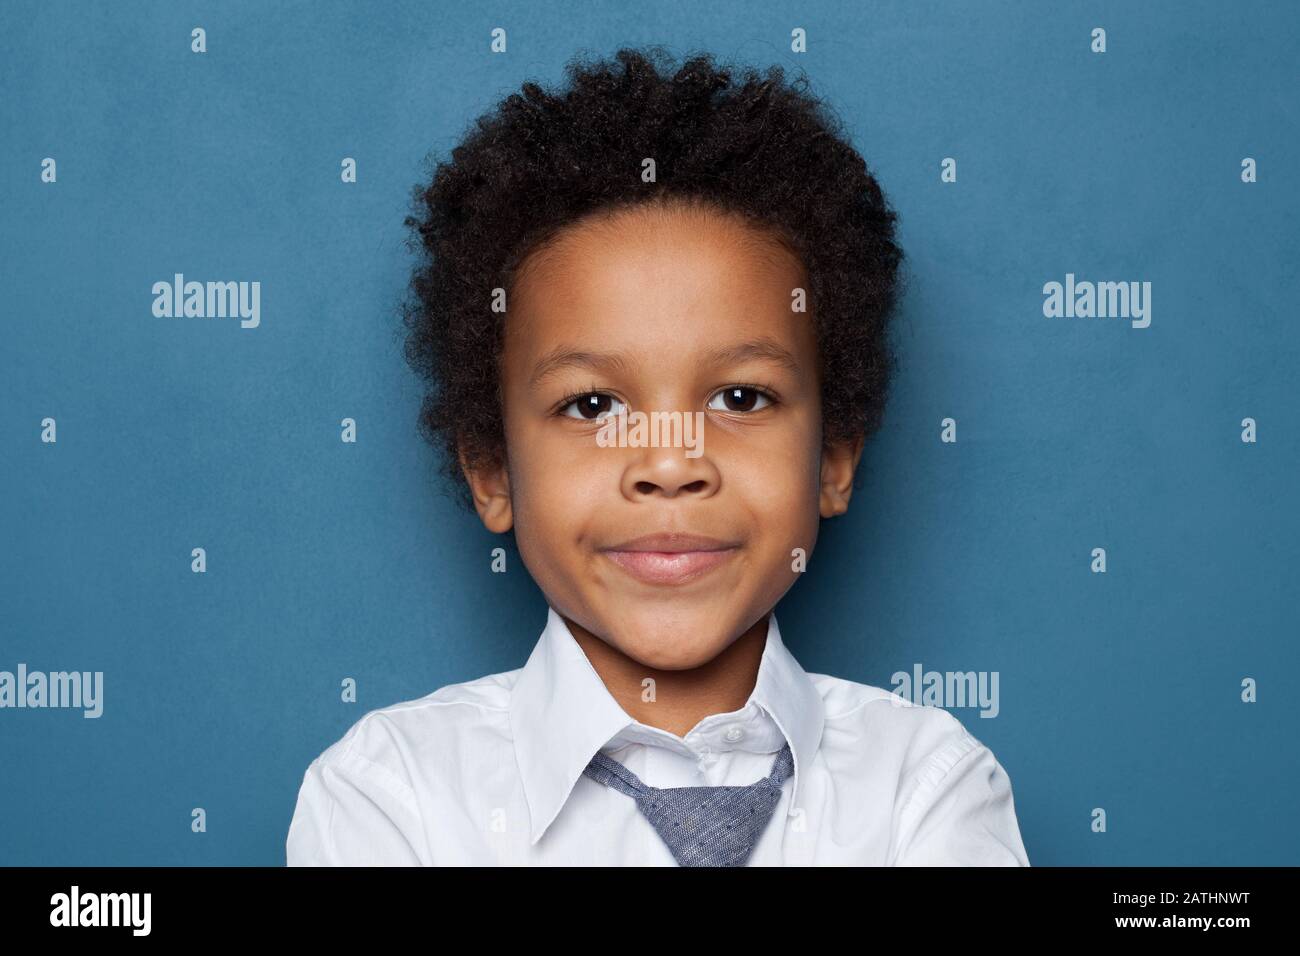 Curious black child schoolboy student portrait on blue background Stock Photo